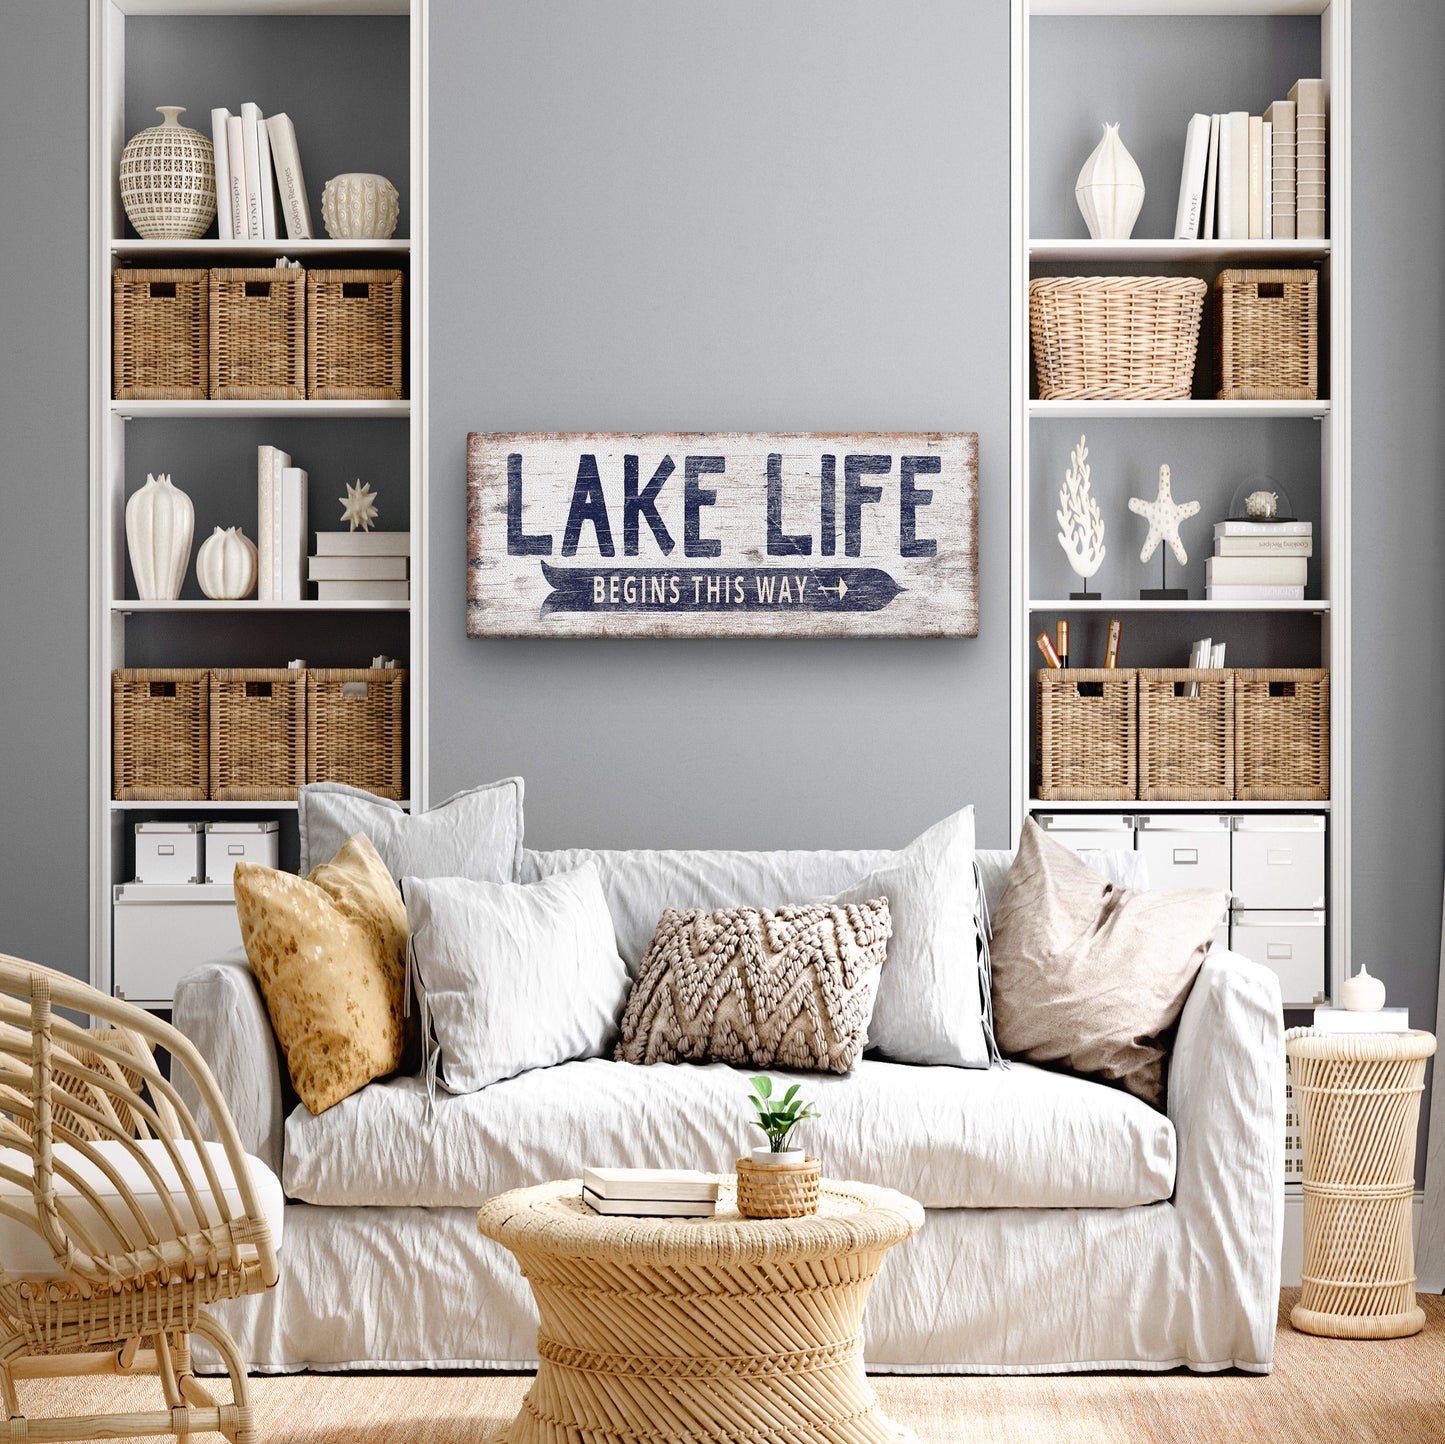 Personalized Lake Life Customizable Sign